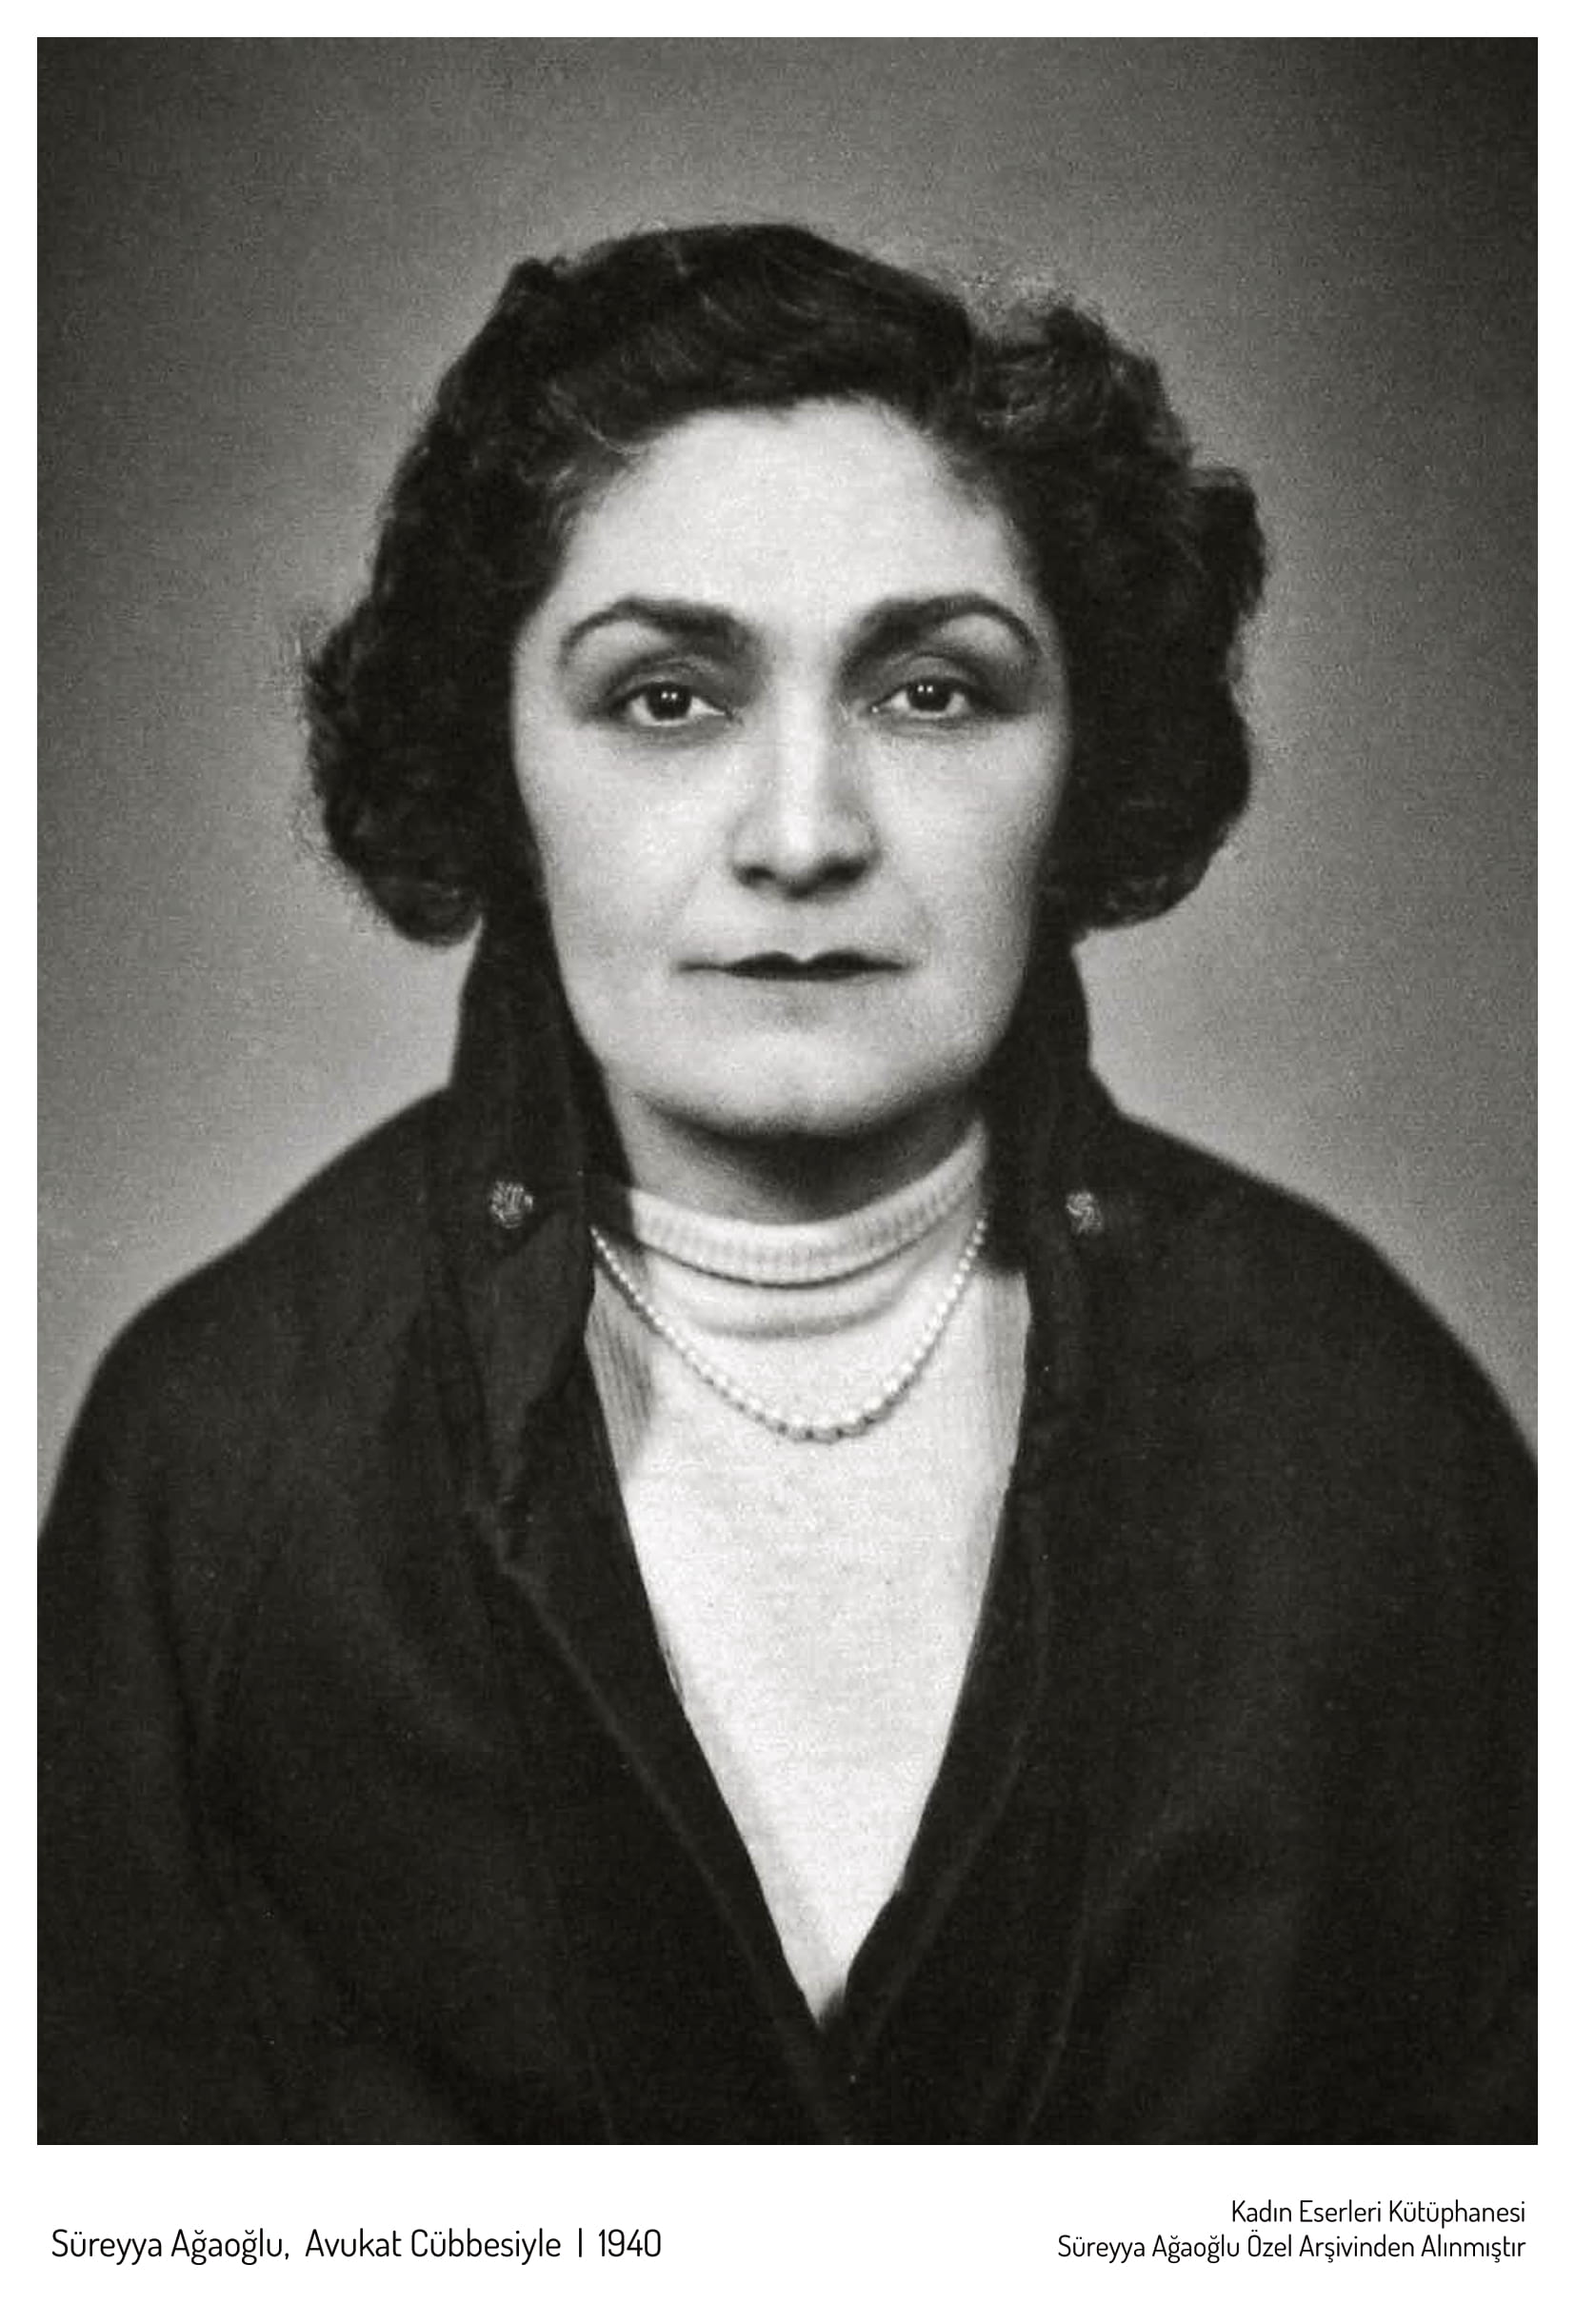 Süreyya Ağaoğlu (1940-1950)